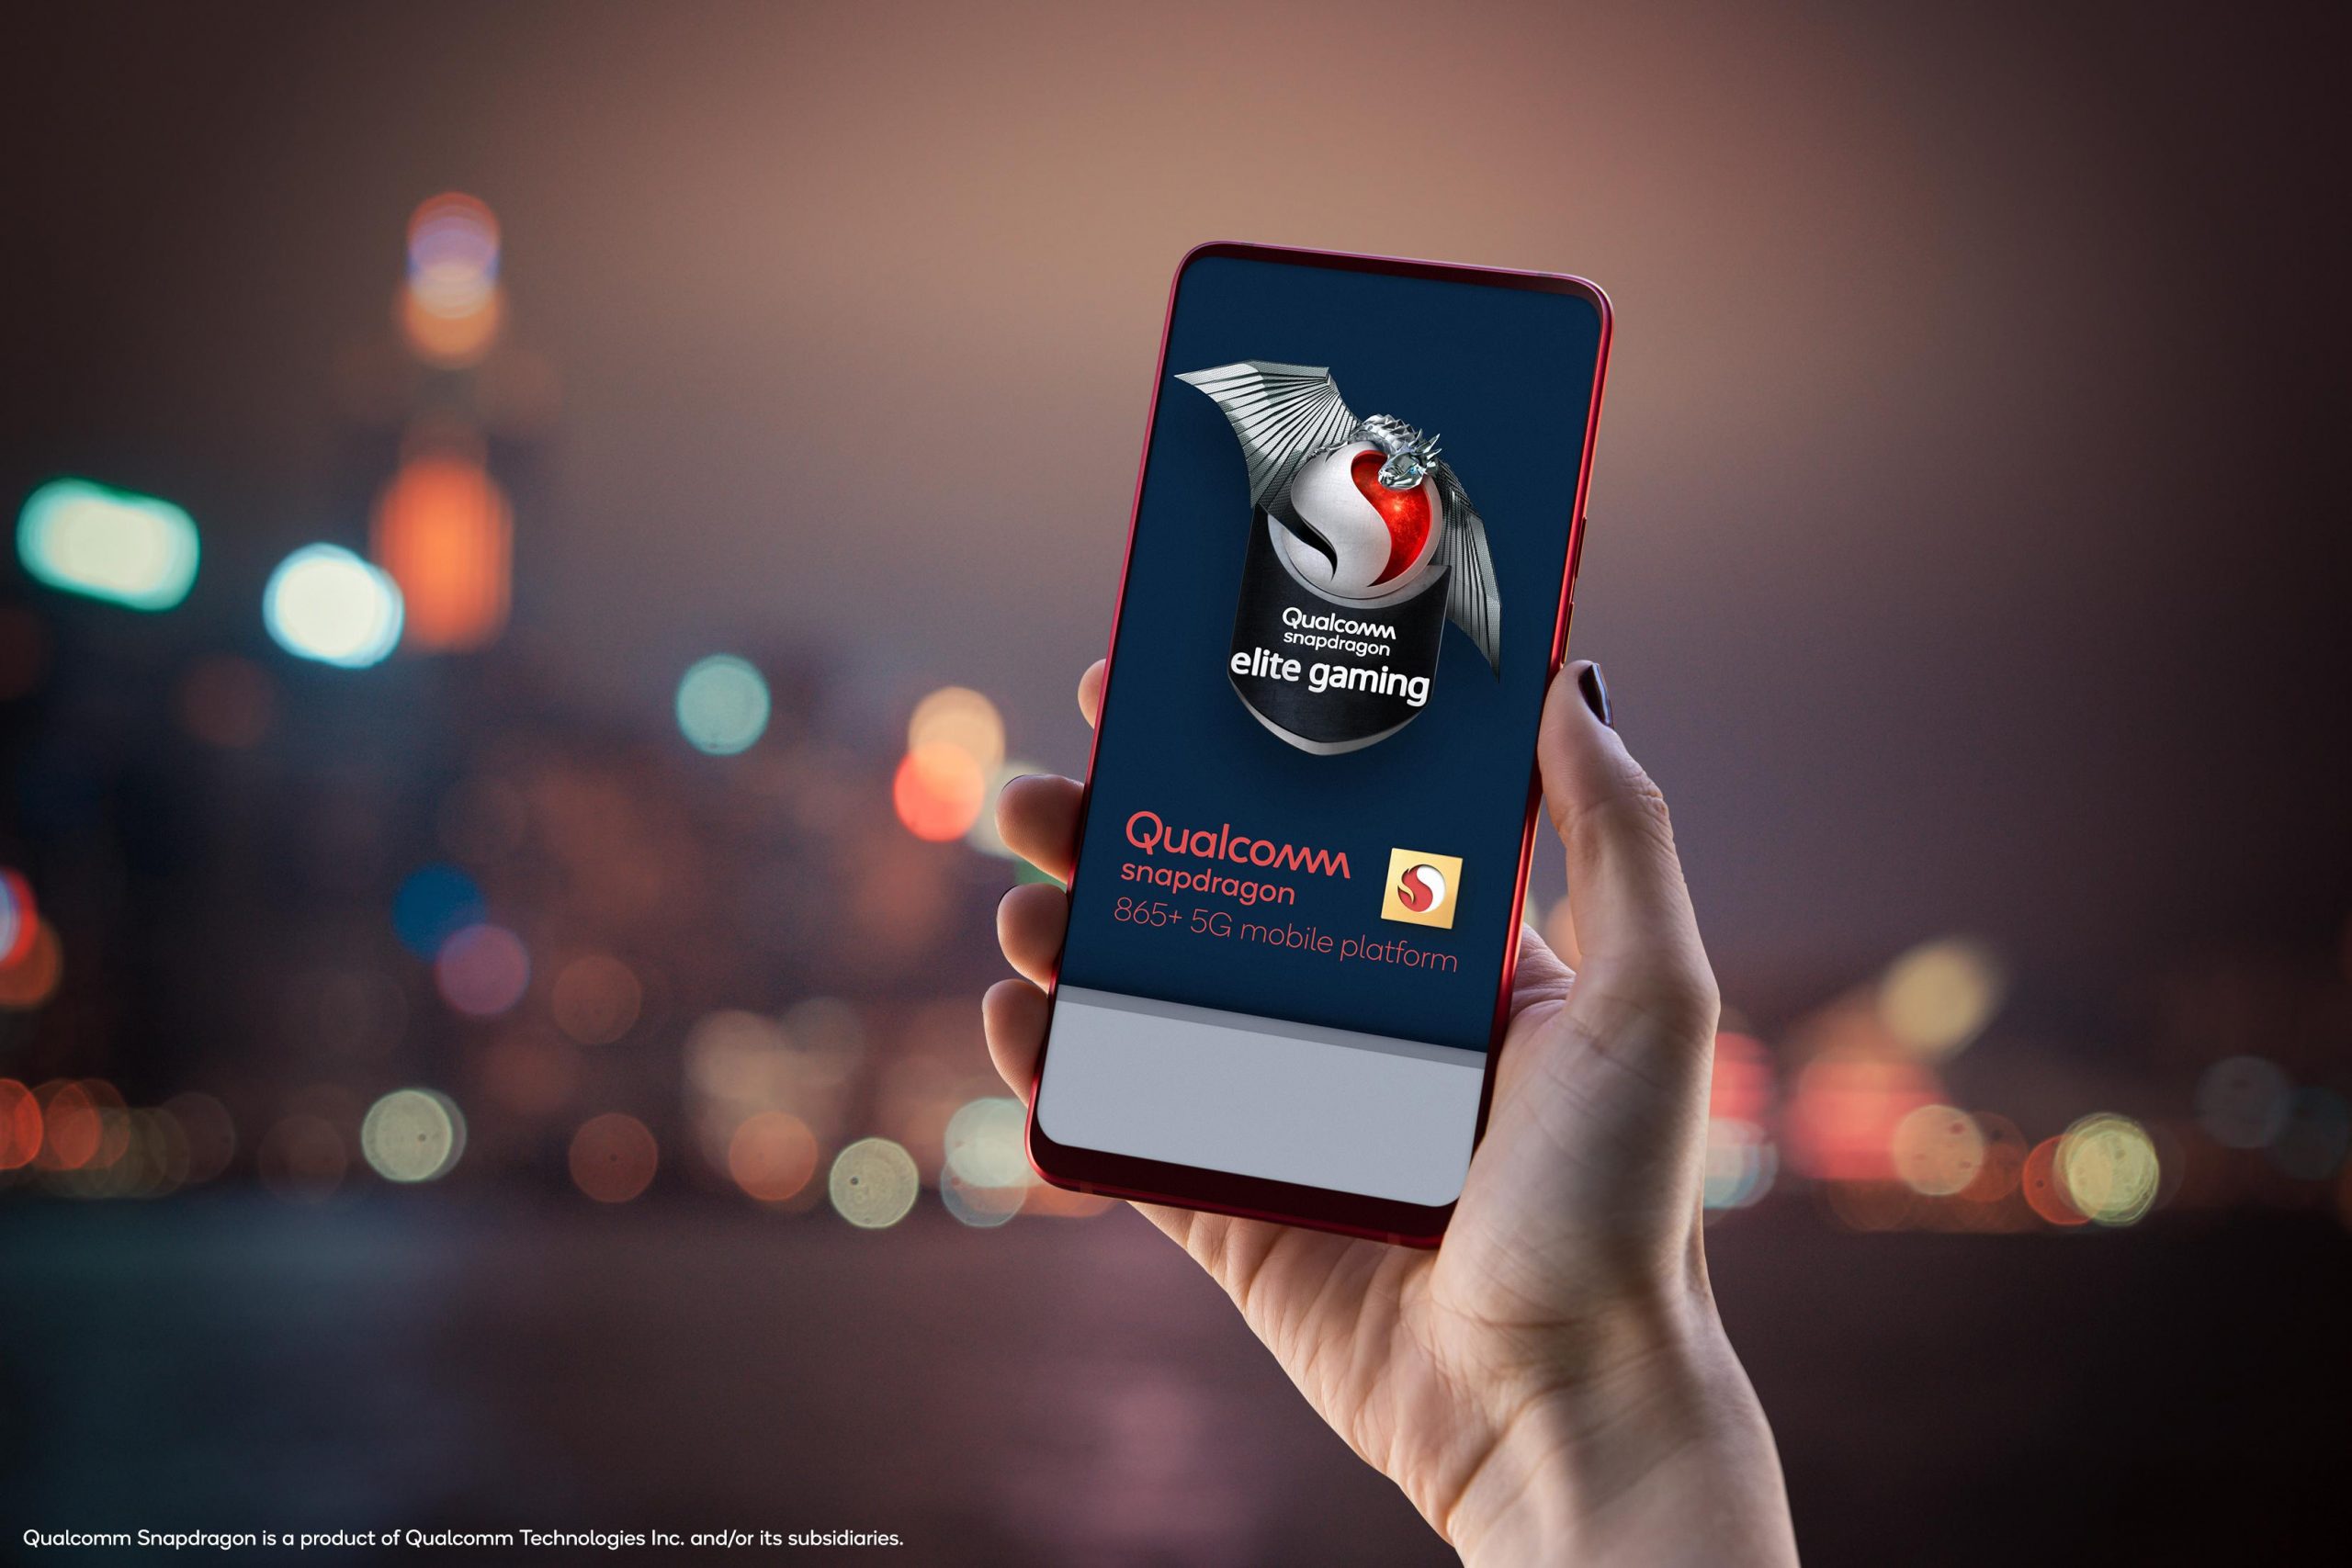 Qualcomm Snapdragon 865 Plus 5G Mobile Platform Announced